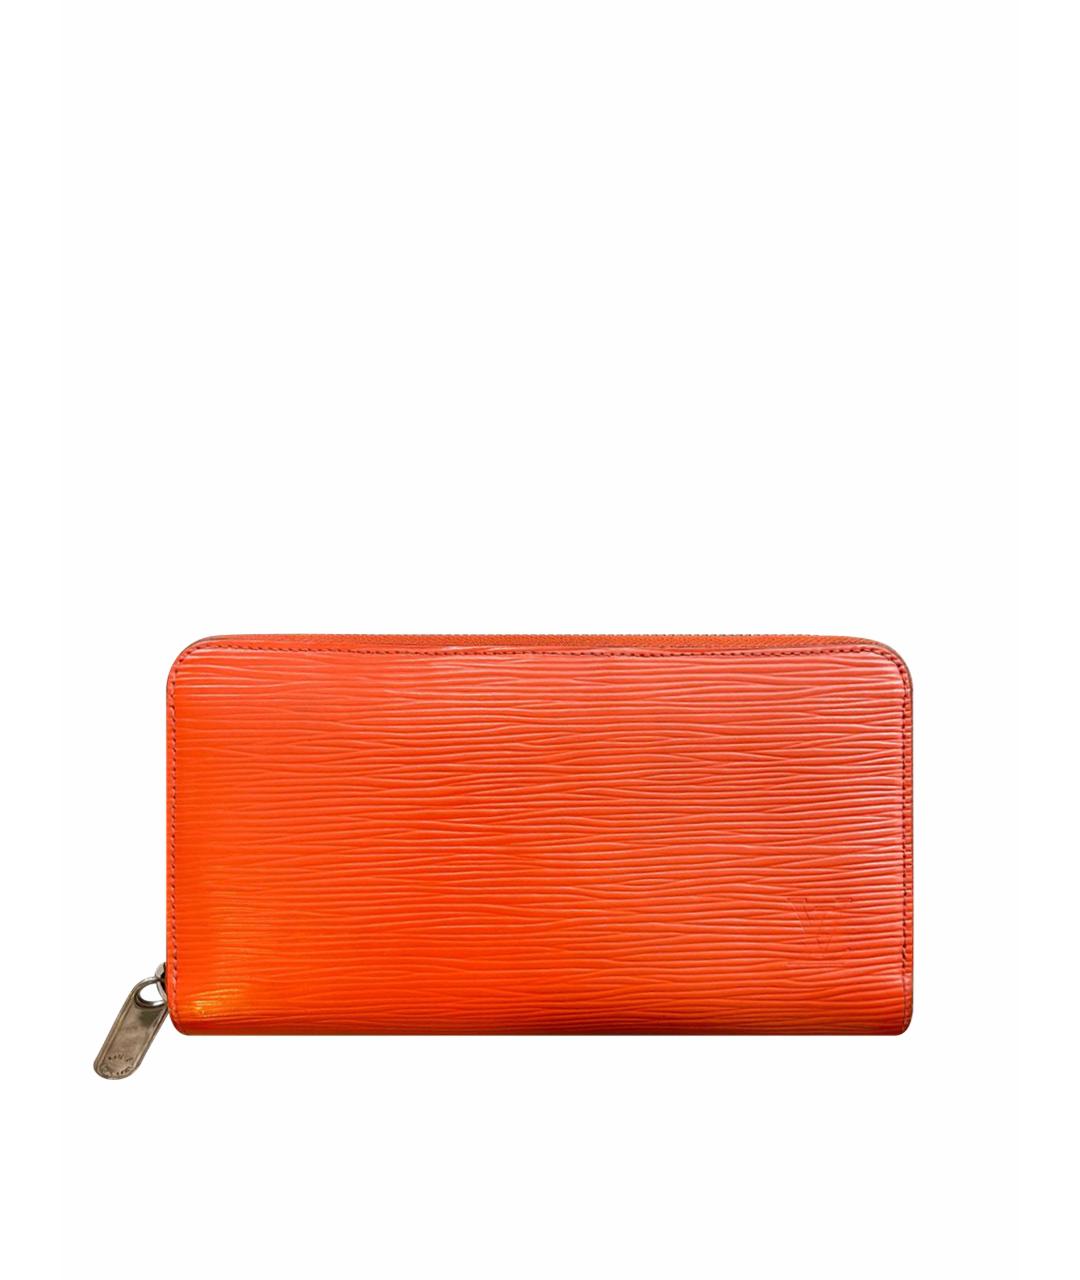 LOUIS VUITTON PRE-OWNED Оранжевый кожаный кошелек, фото 1